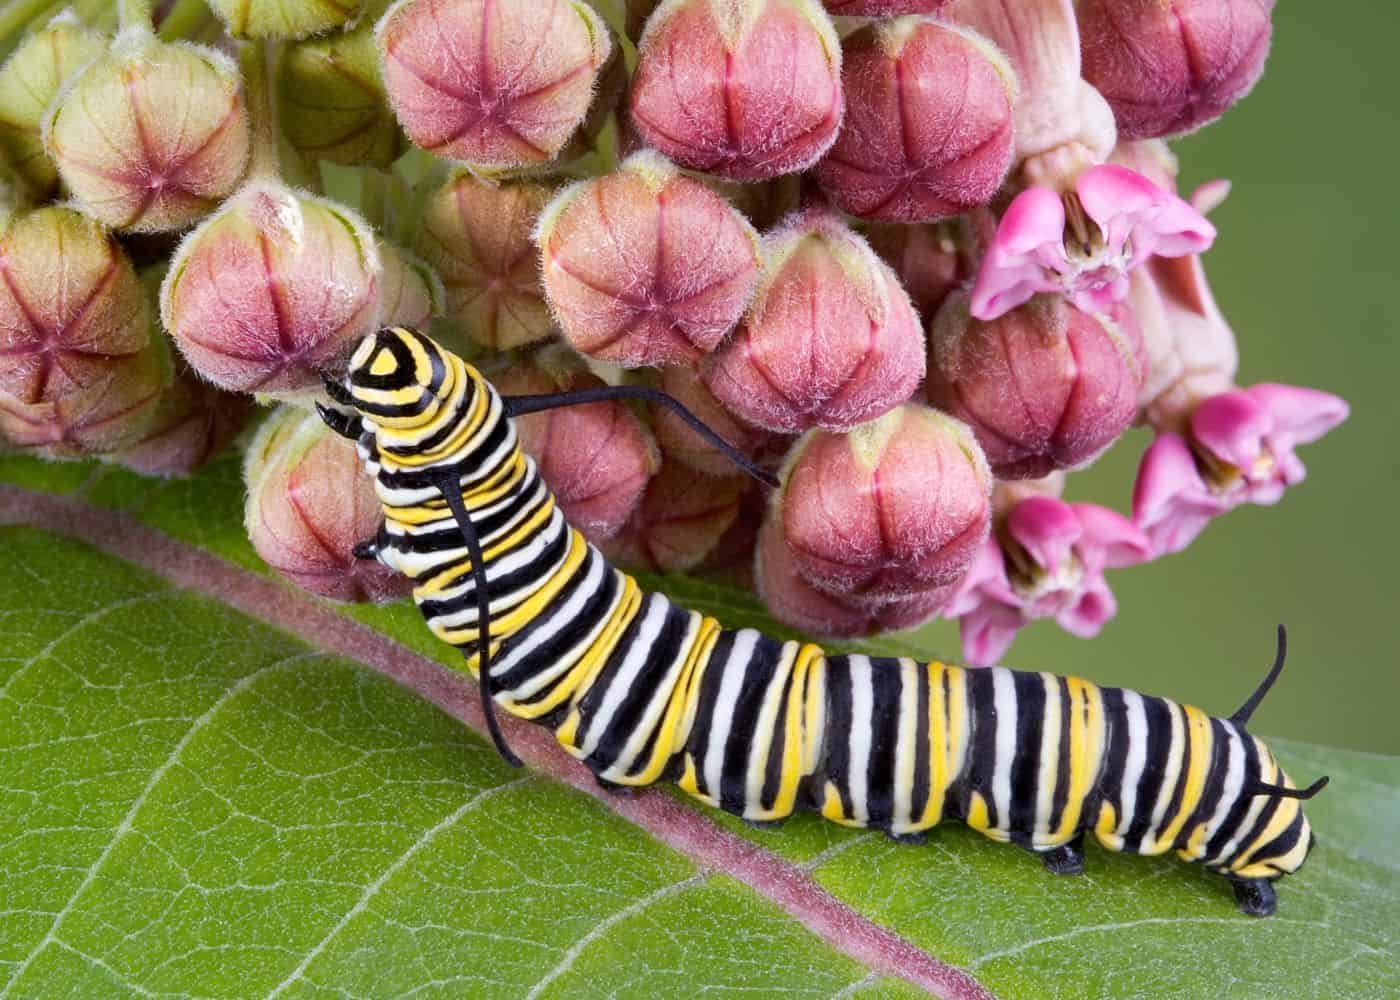 Monarch caterpillar on milkweed blossom